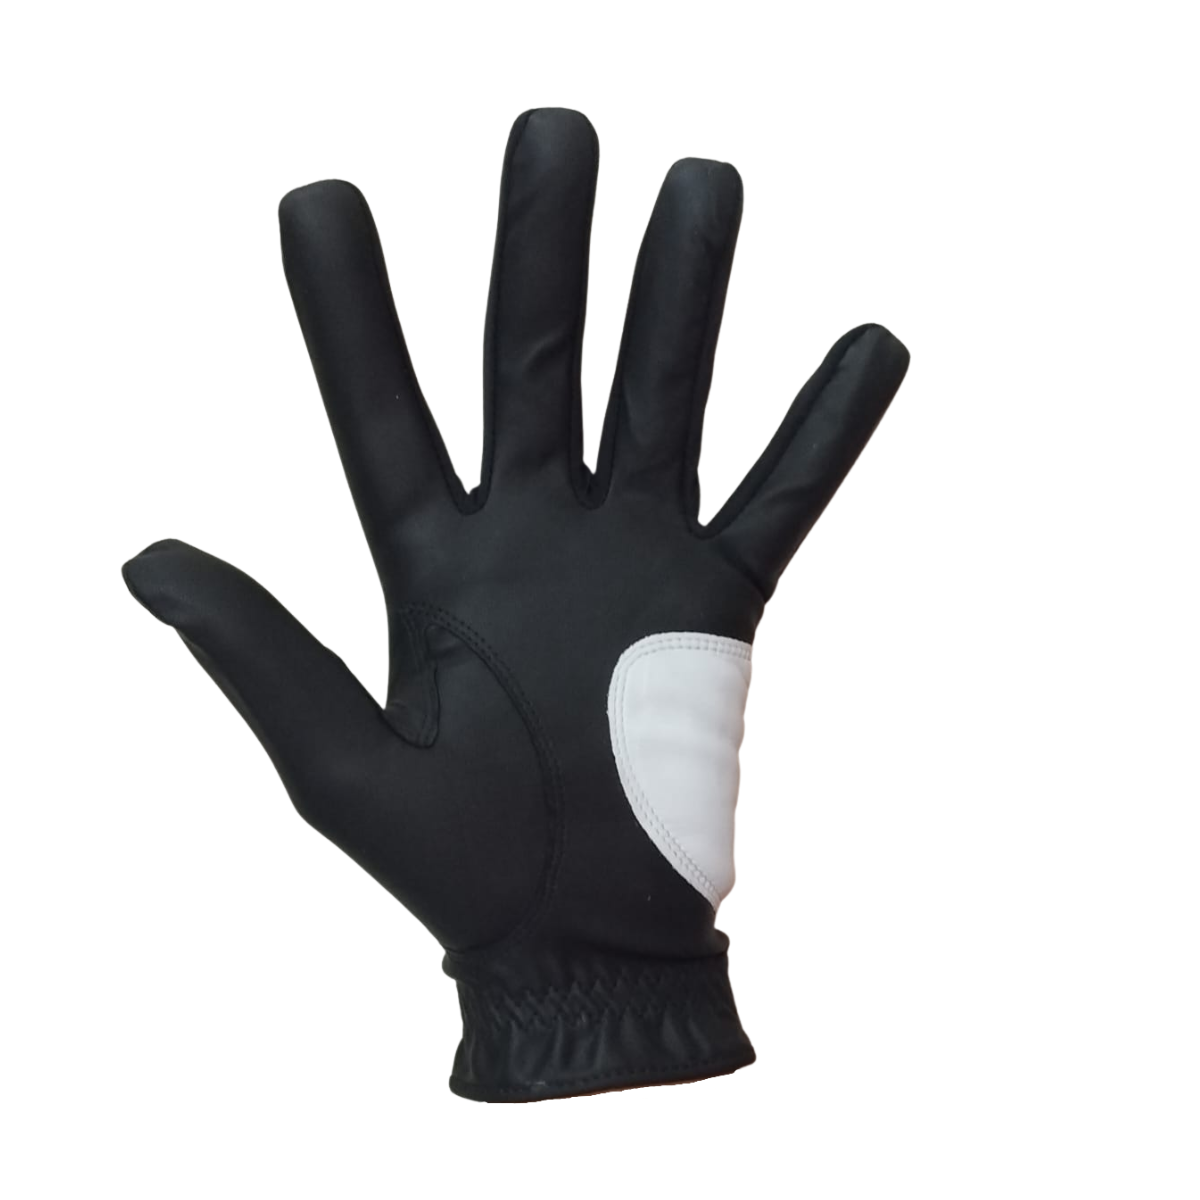 Premium Quality All Weather Golf Glove